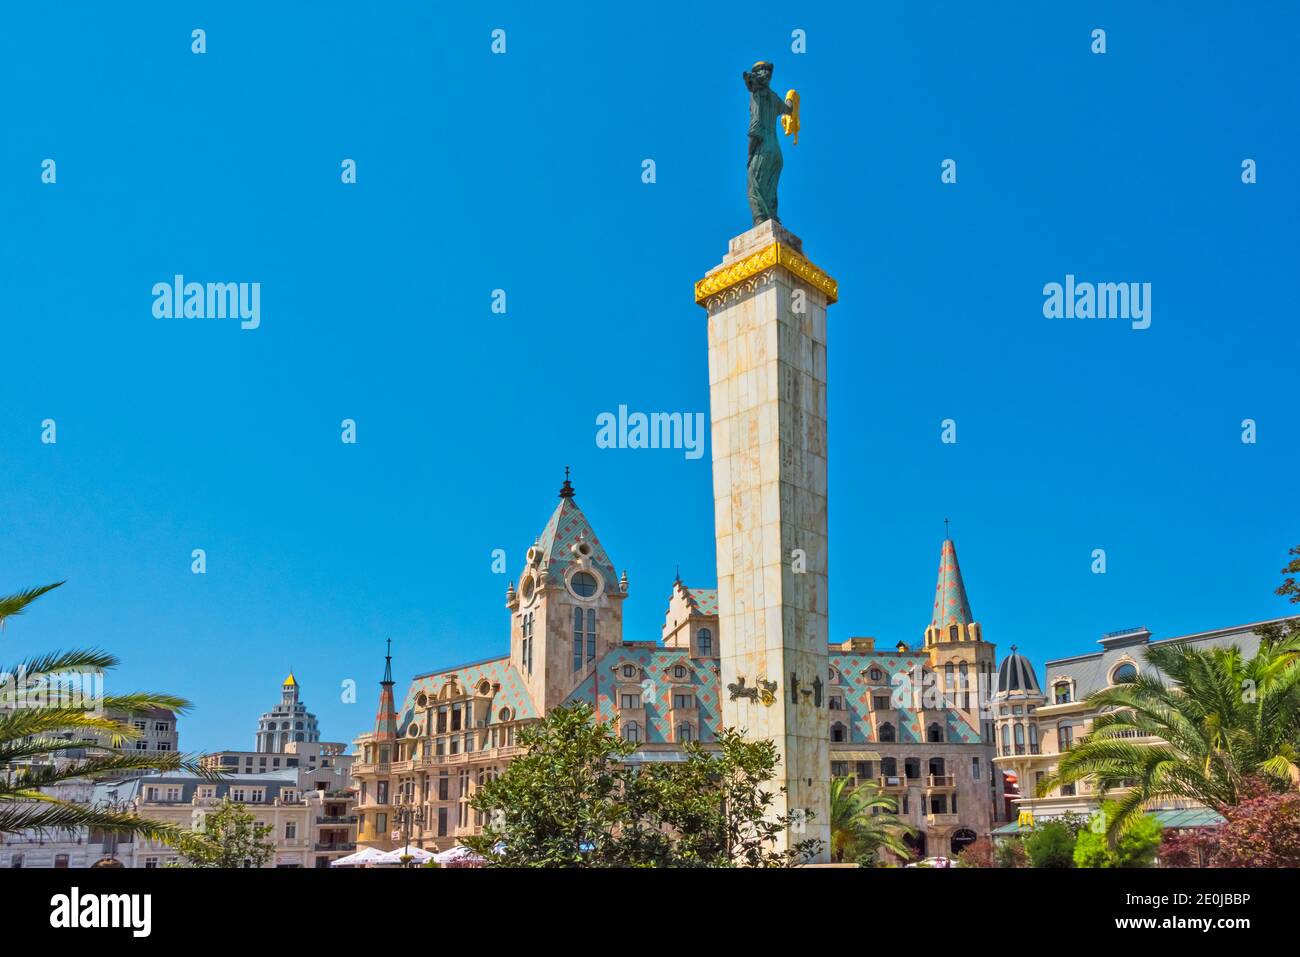 Statue of Medea holding golden fleece and beautiful buildings in Europe Square, Batumi, Georgia Stock Photo